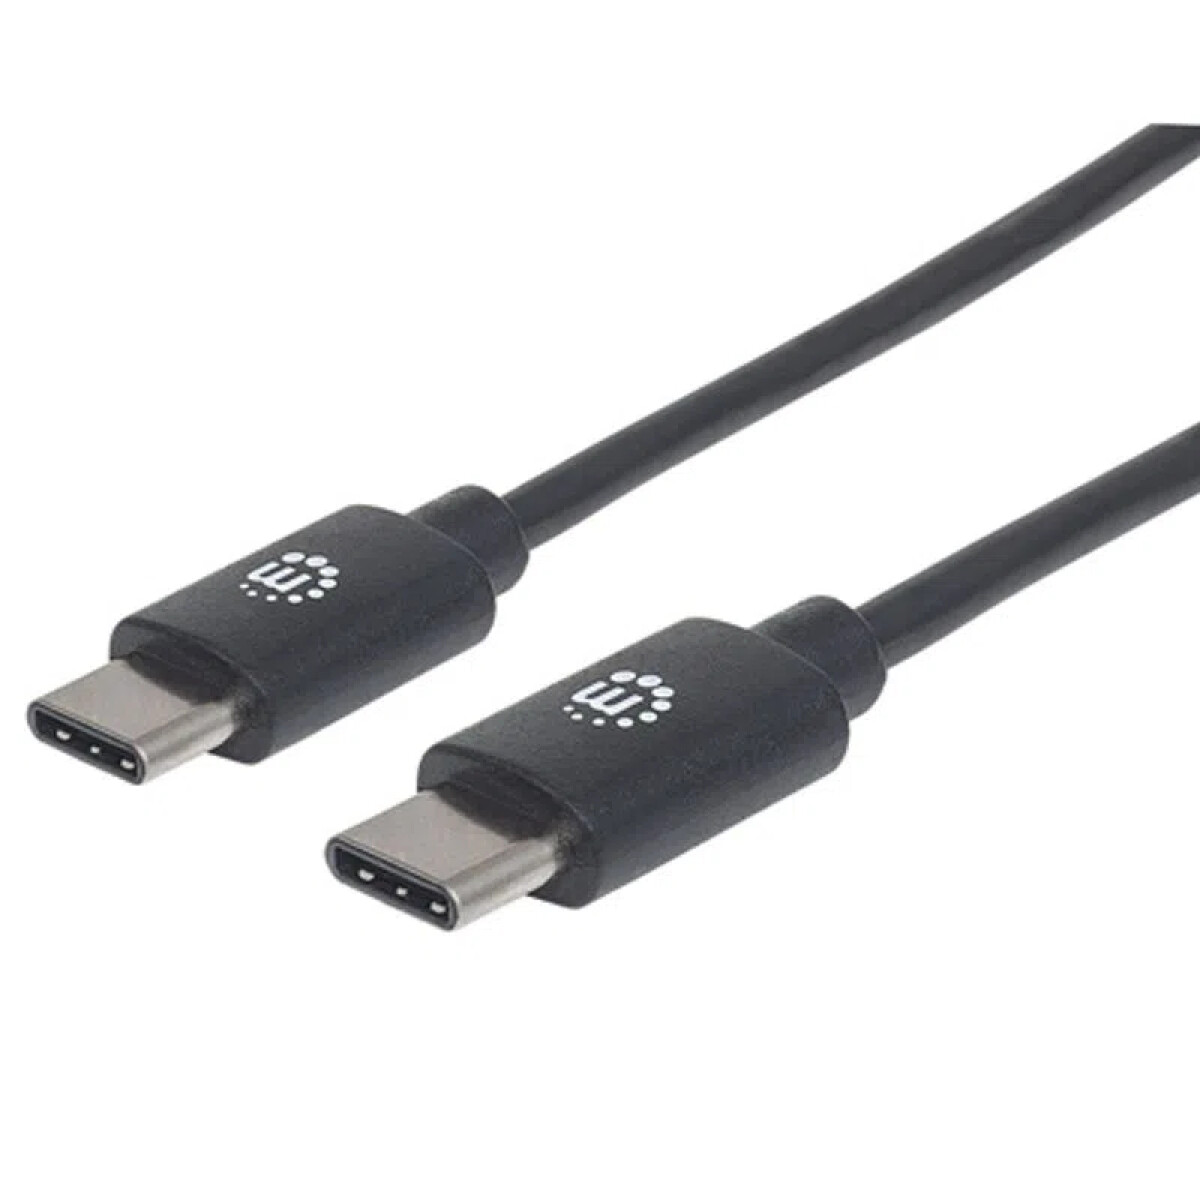 Cable USB C macho/macho 2,0 mts - Manhattan - Cable Usb C Macho/macho 2,0 Mts - Manhattan 